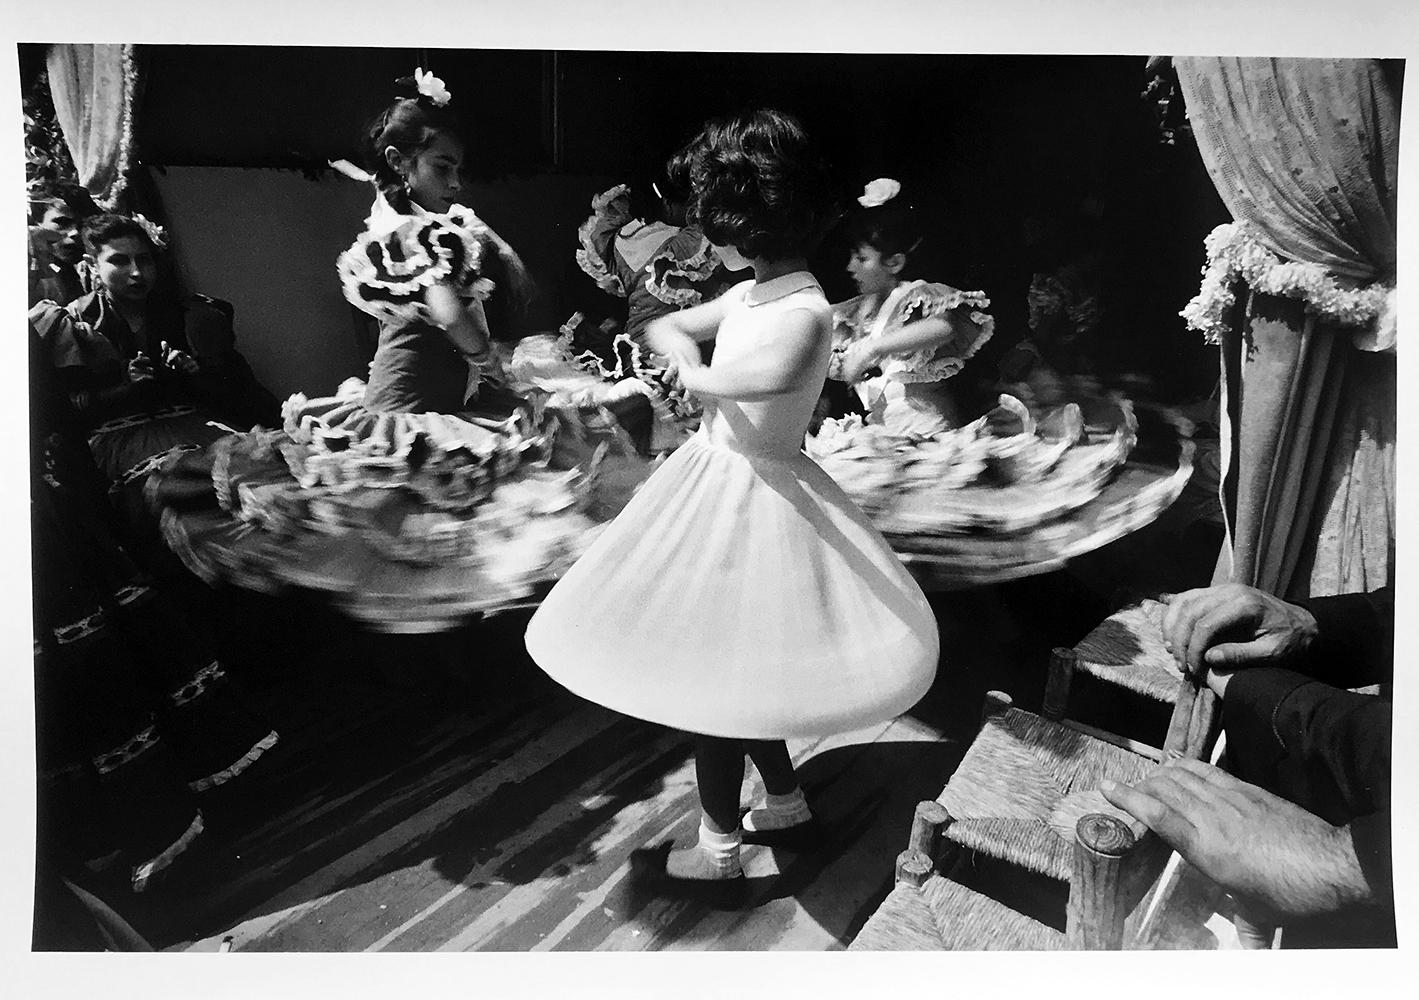 Dancing Girls, Black and White Portrait Photograph of Children in Sevilla, Spain